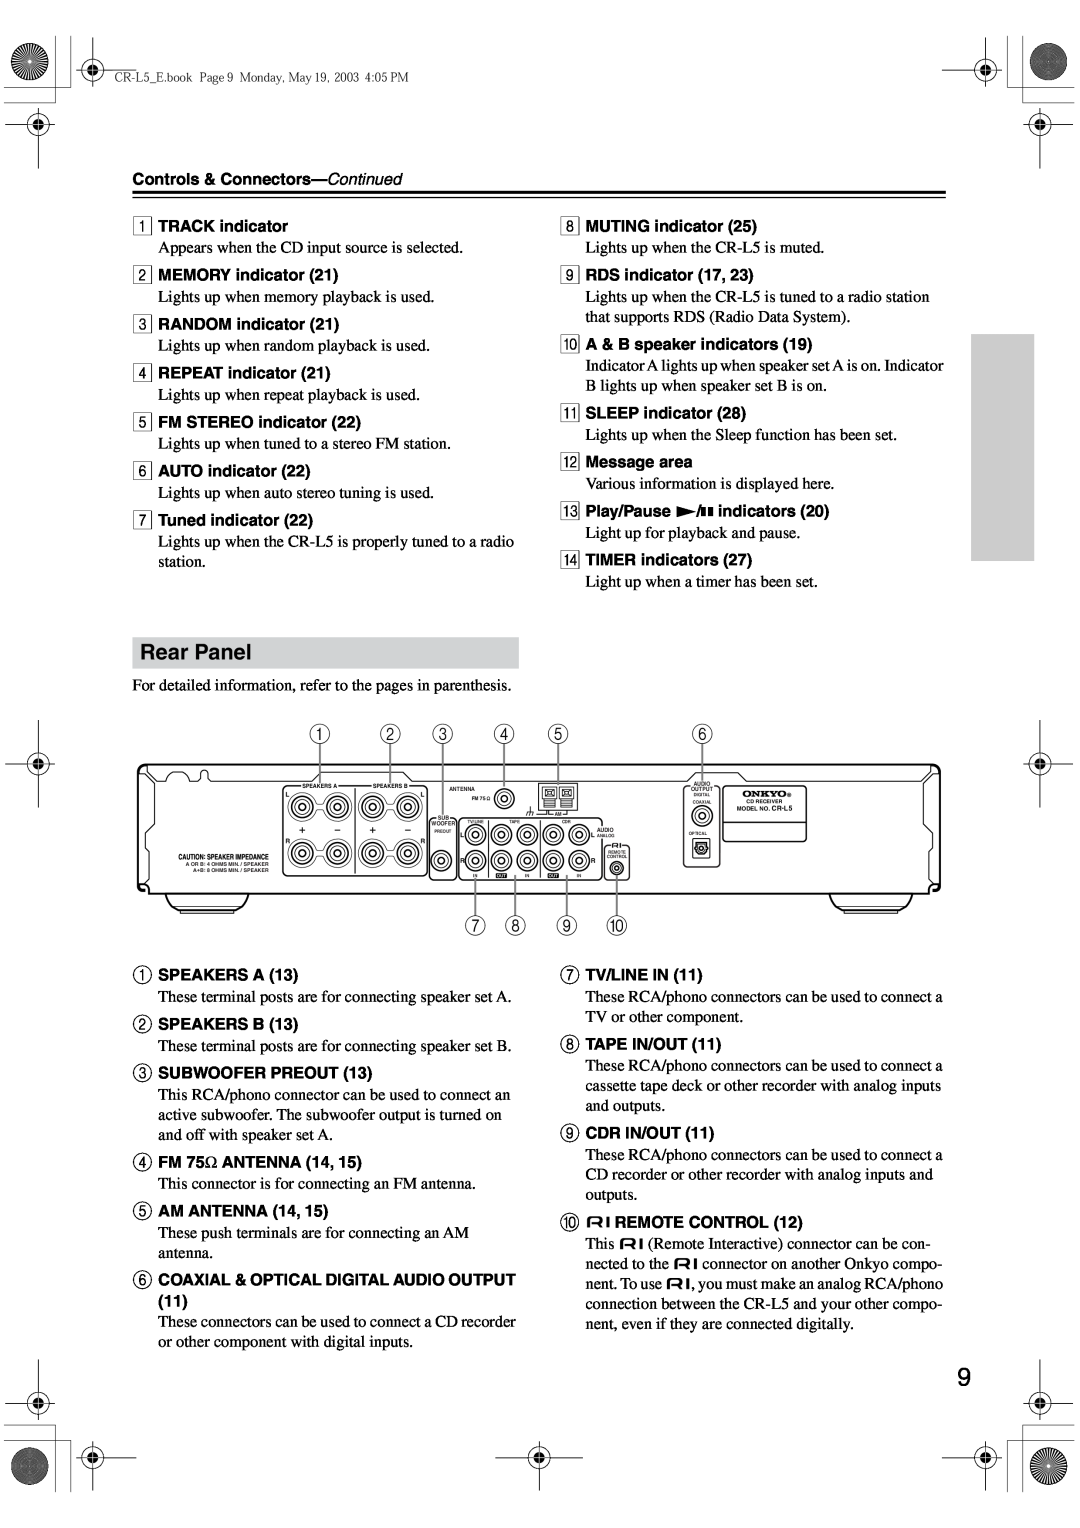 Onkyo CR-L5 instruction manual Rear Panel, 7 8 9 J 